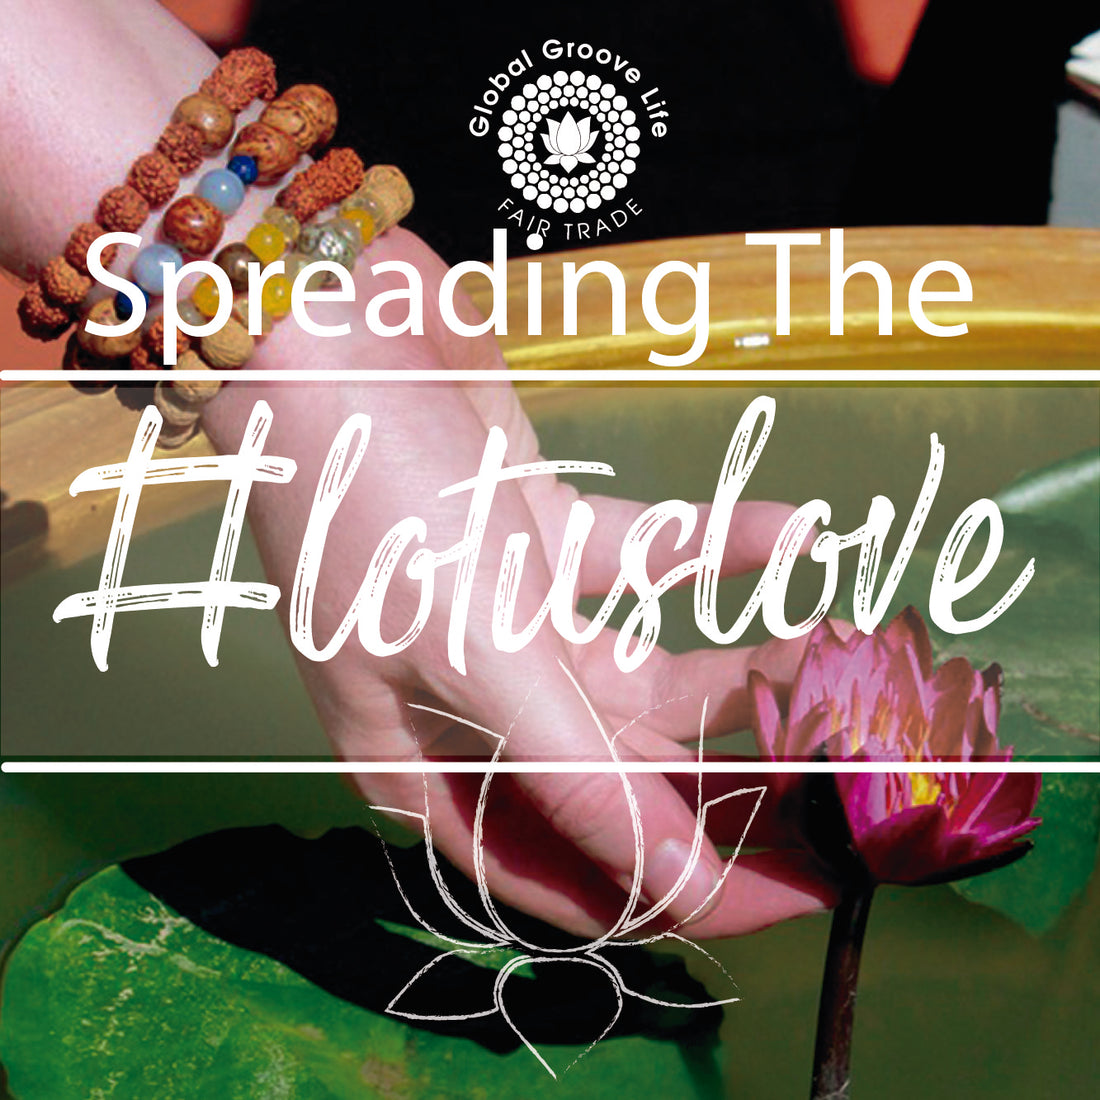 Spreading The #LotusLove